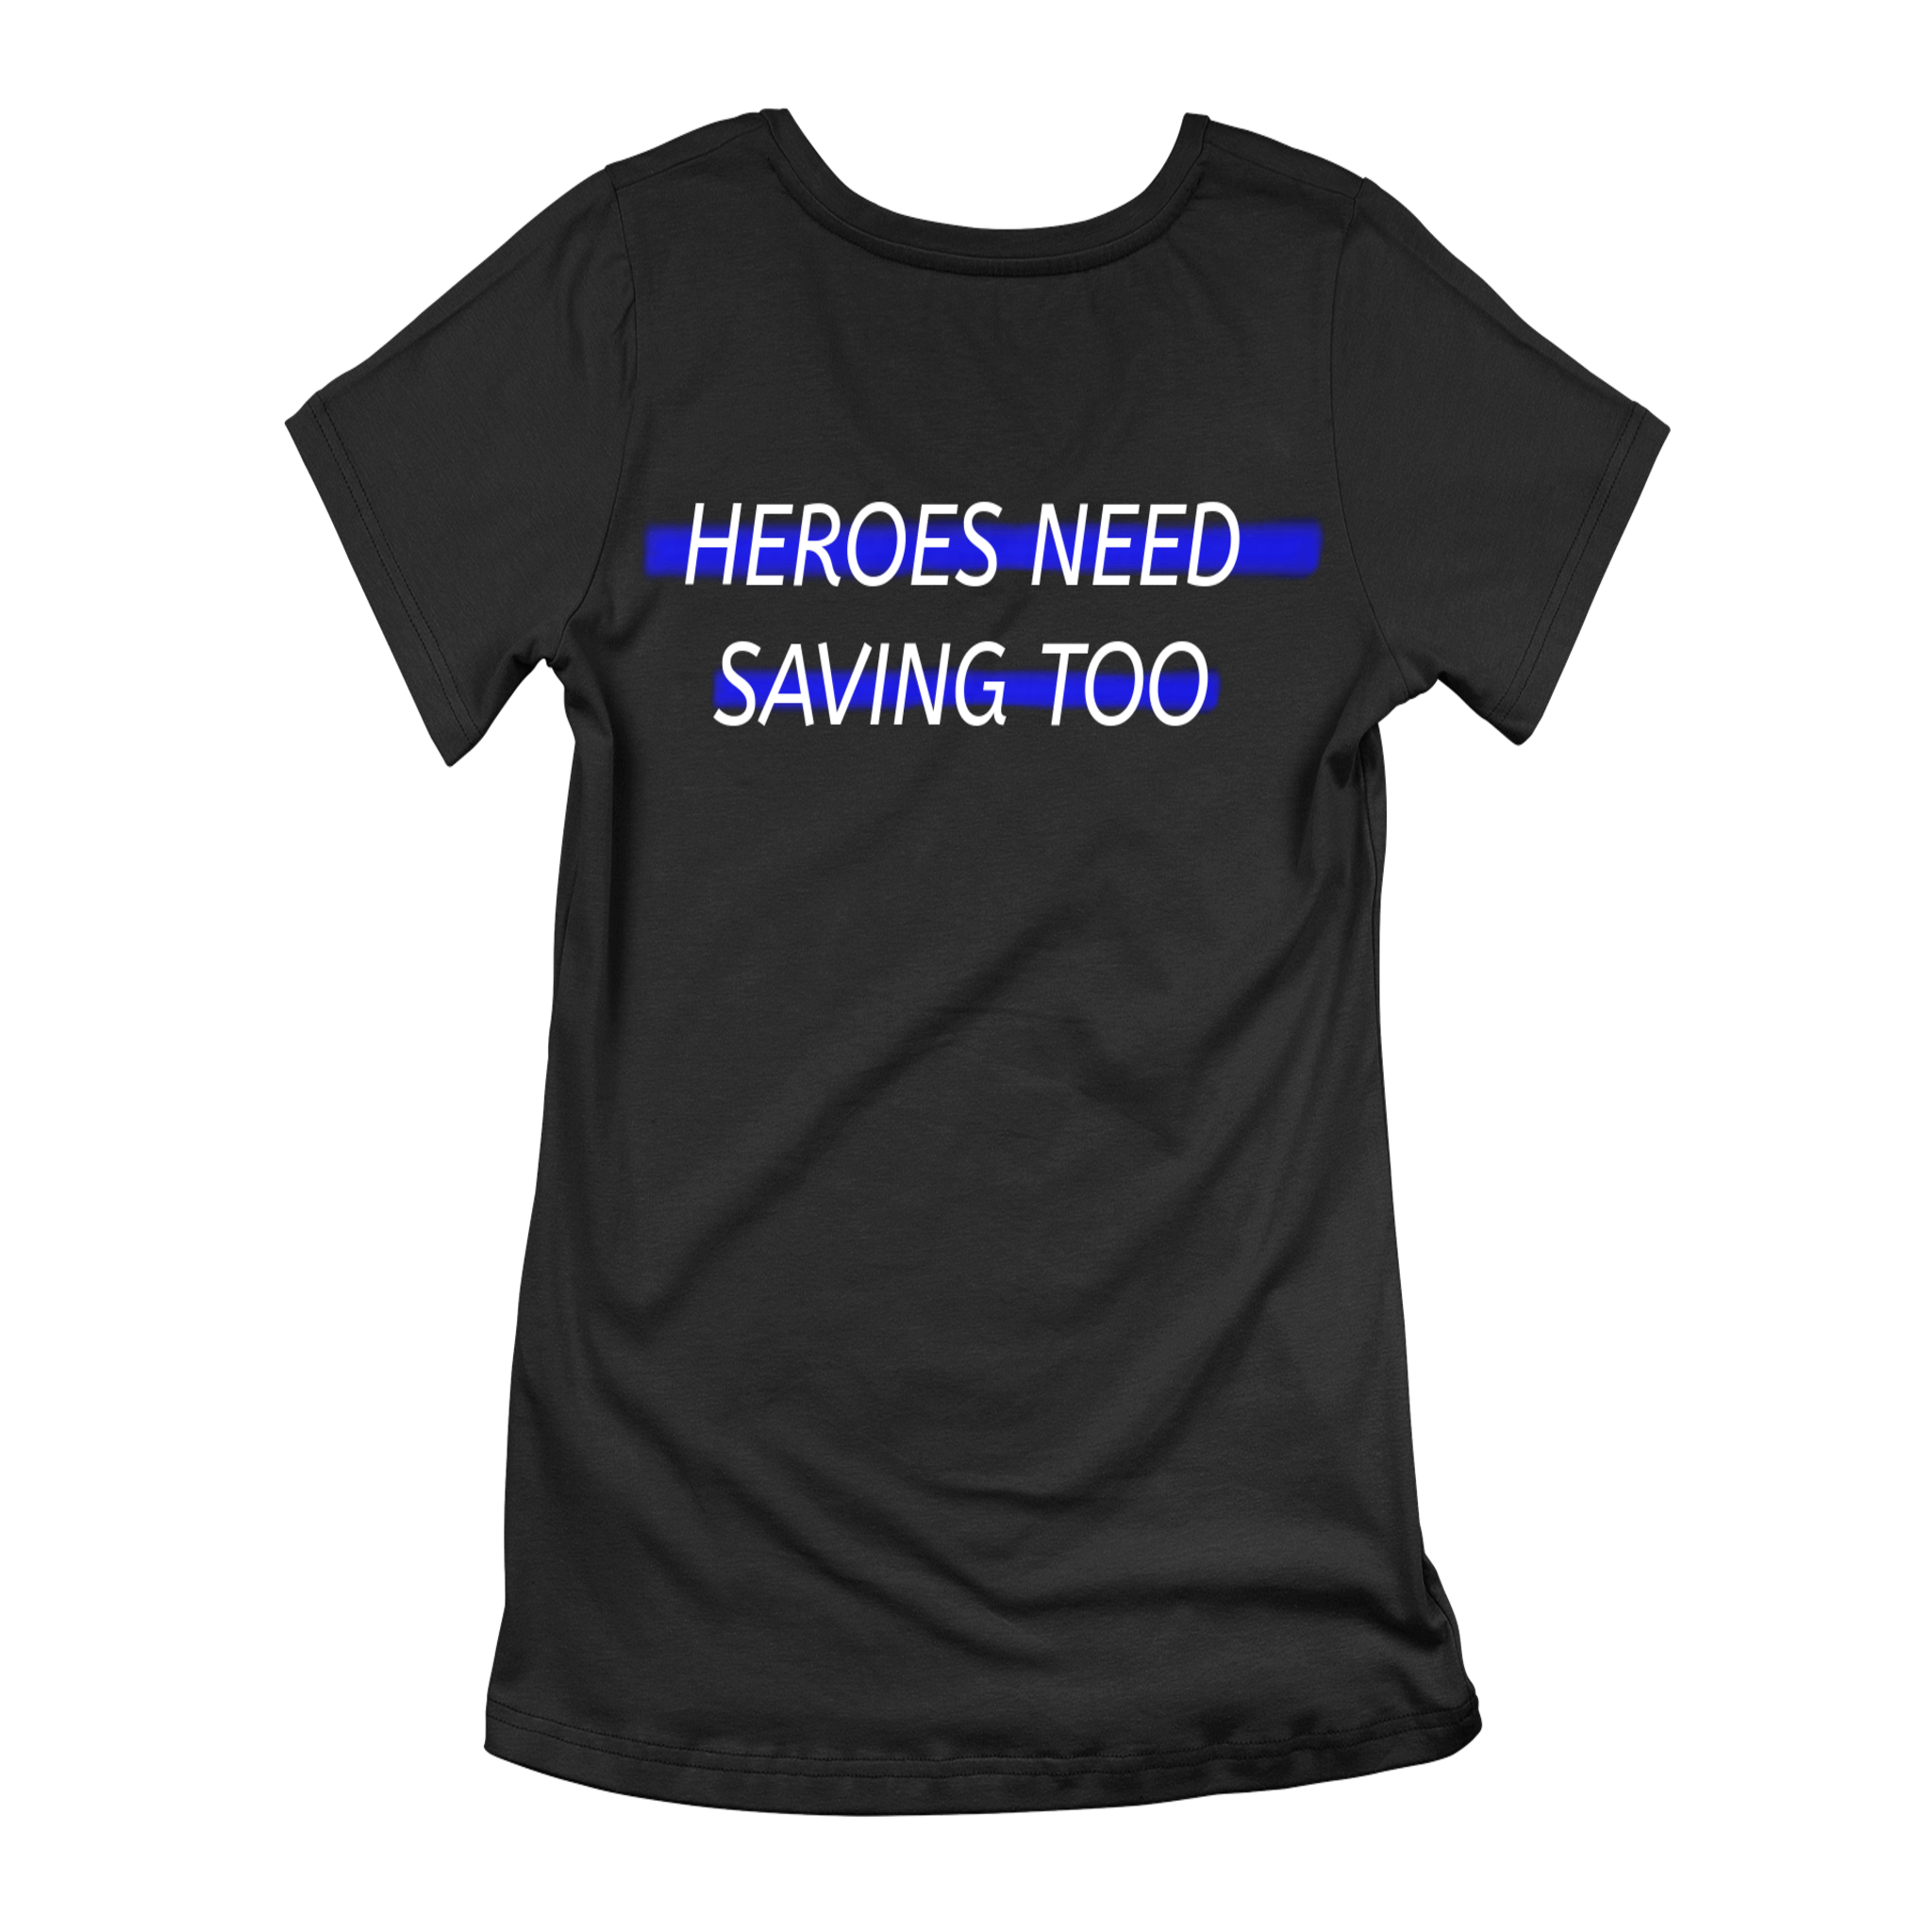 law enforcement women's shirt for mental health